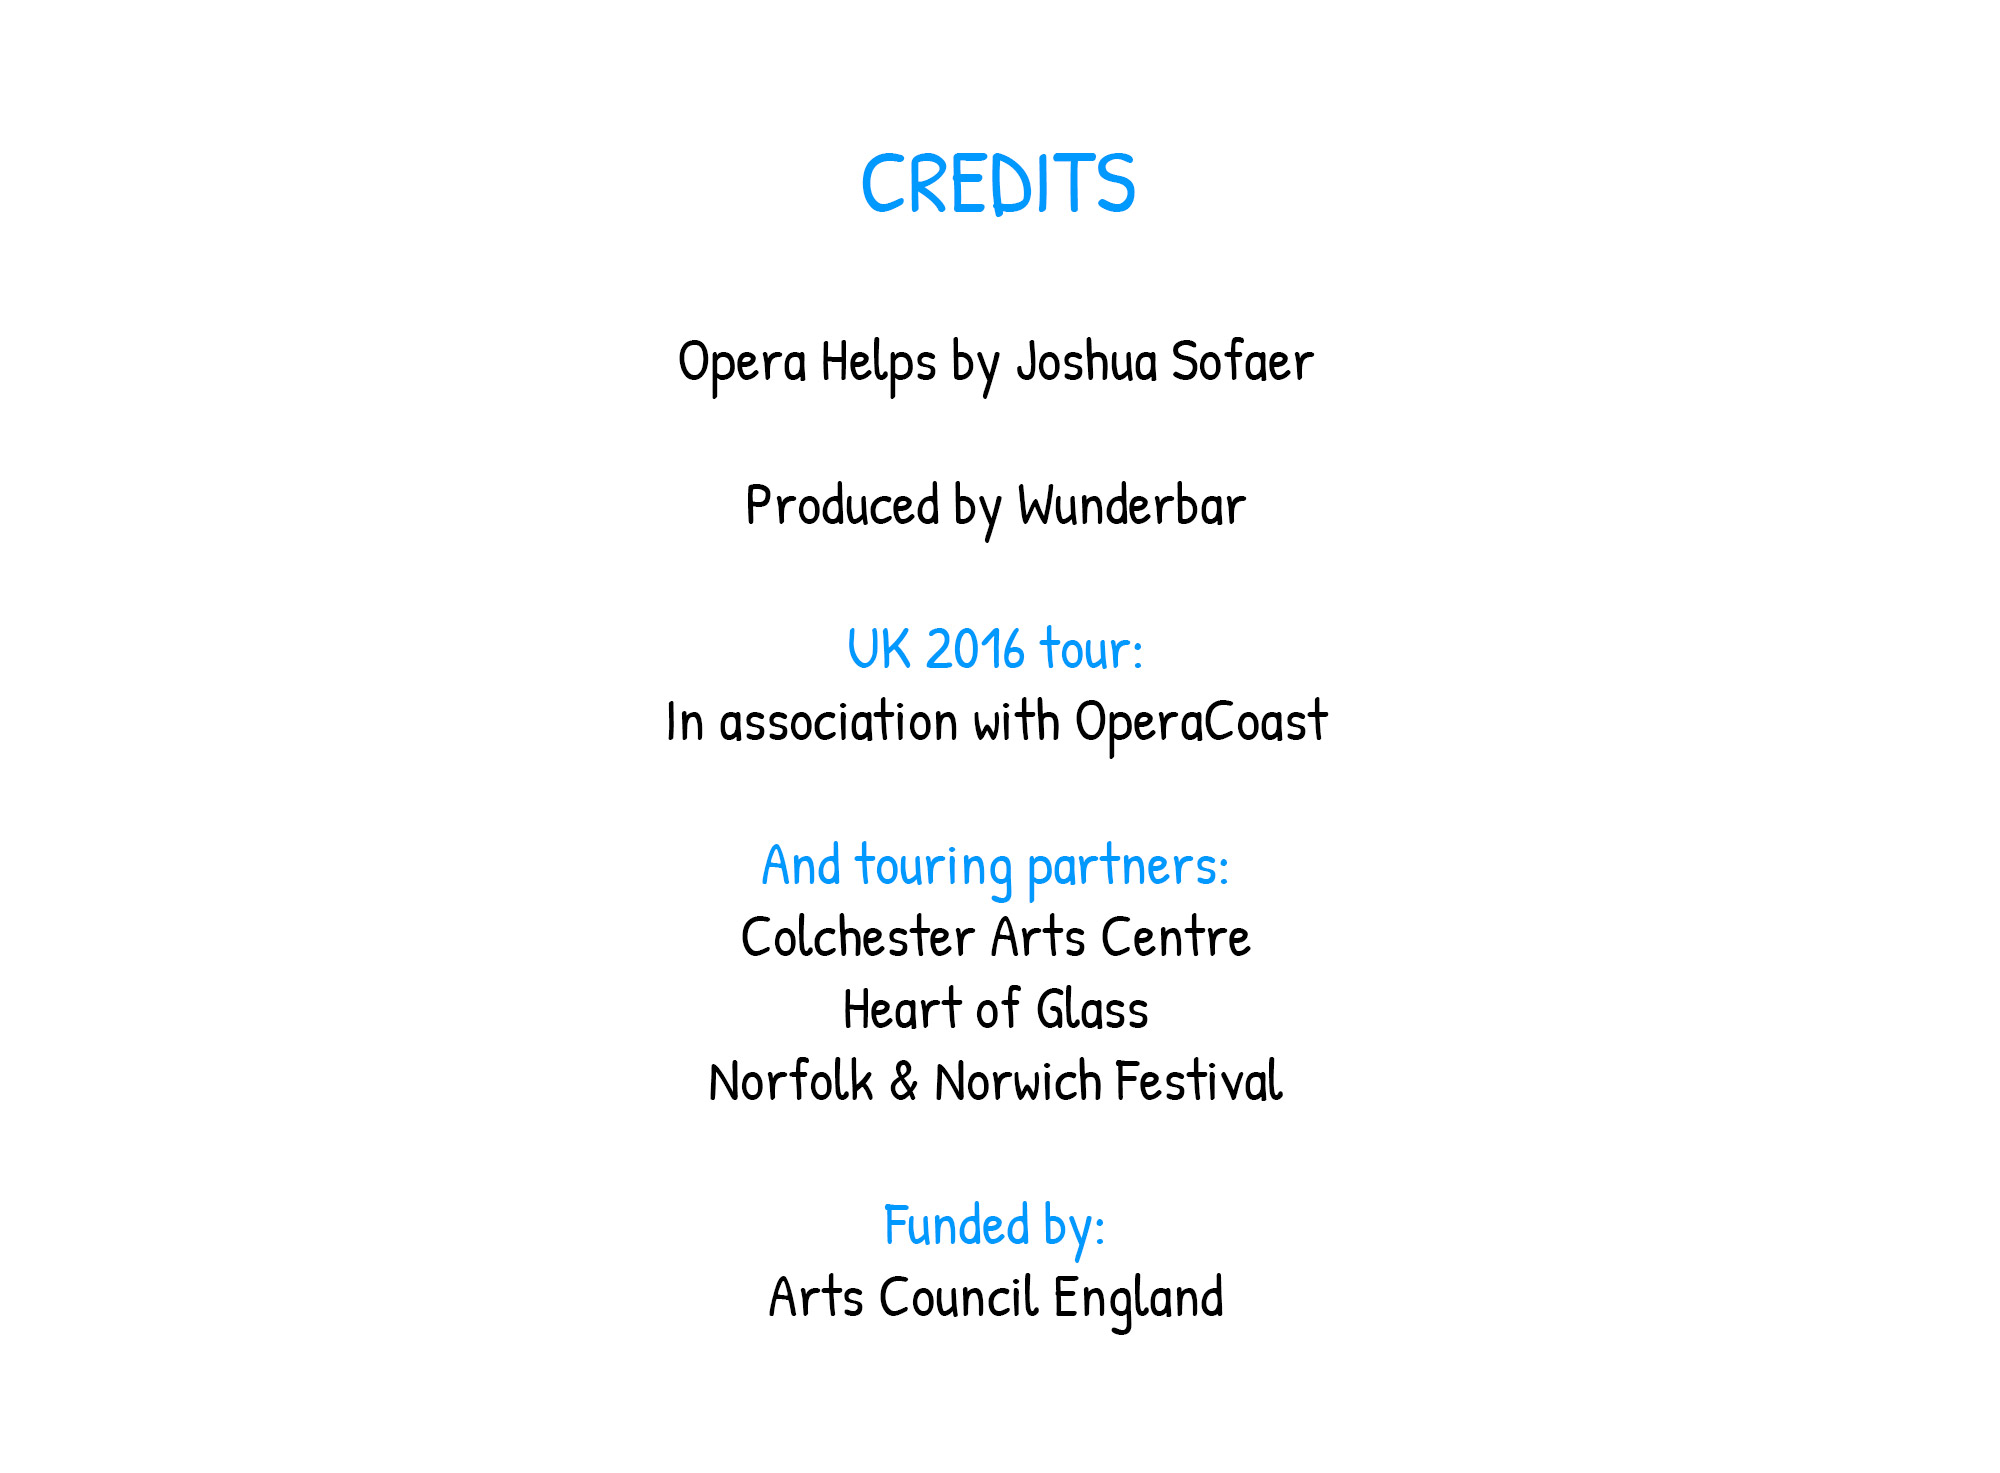 Opera Helps by Joshua Sofaer, produced by Wunderbar